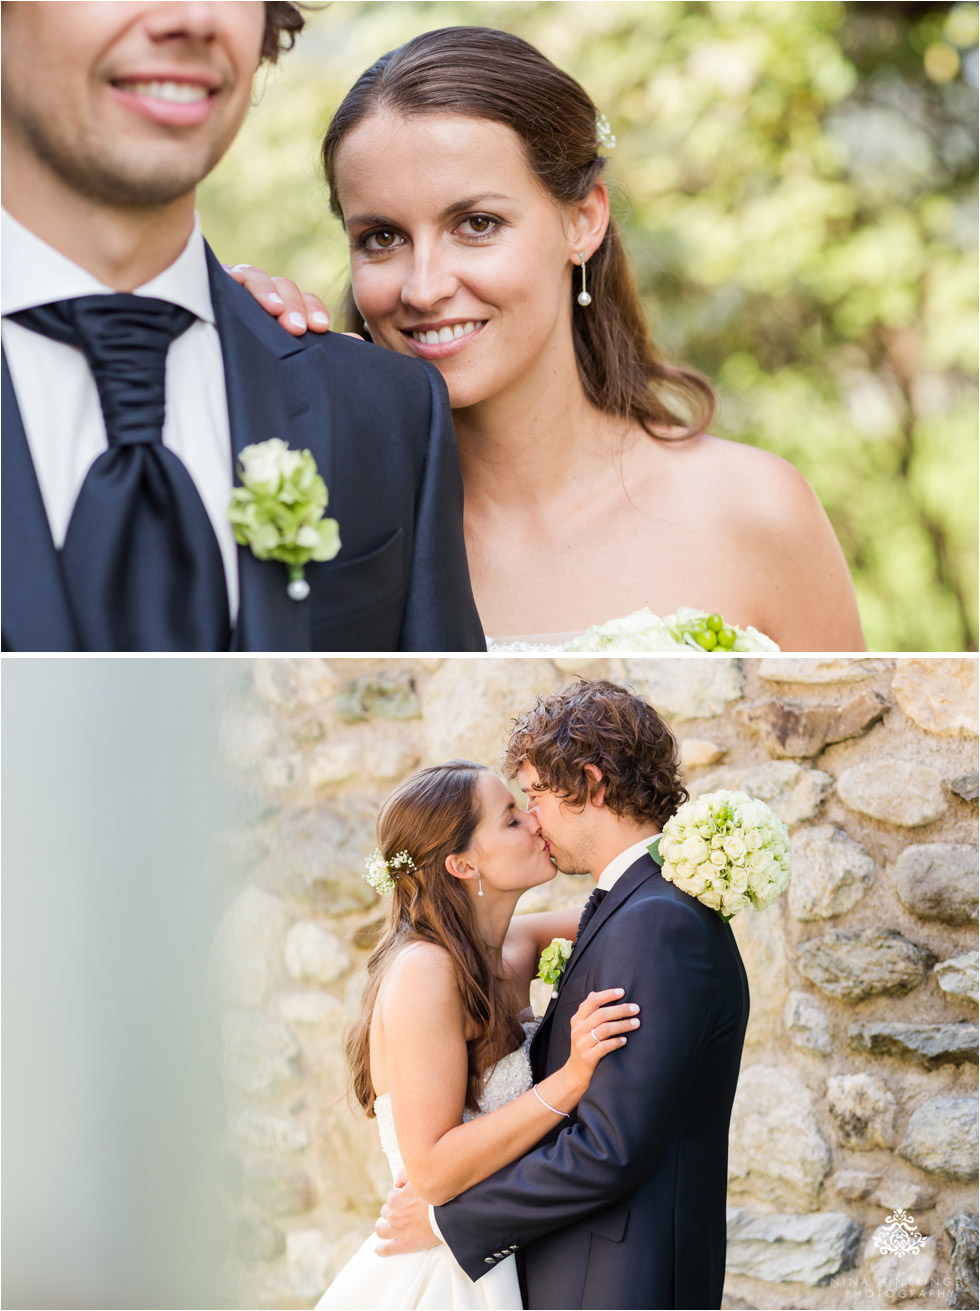 Touching wedding with M & M | Zillertal, Tyrol - Blog of Nina Hintringer Photography - Wedding Photography, Wedding Reportage and Destination Weddings